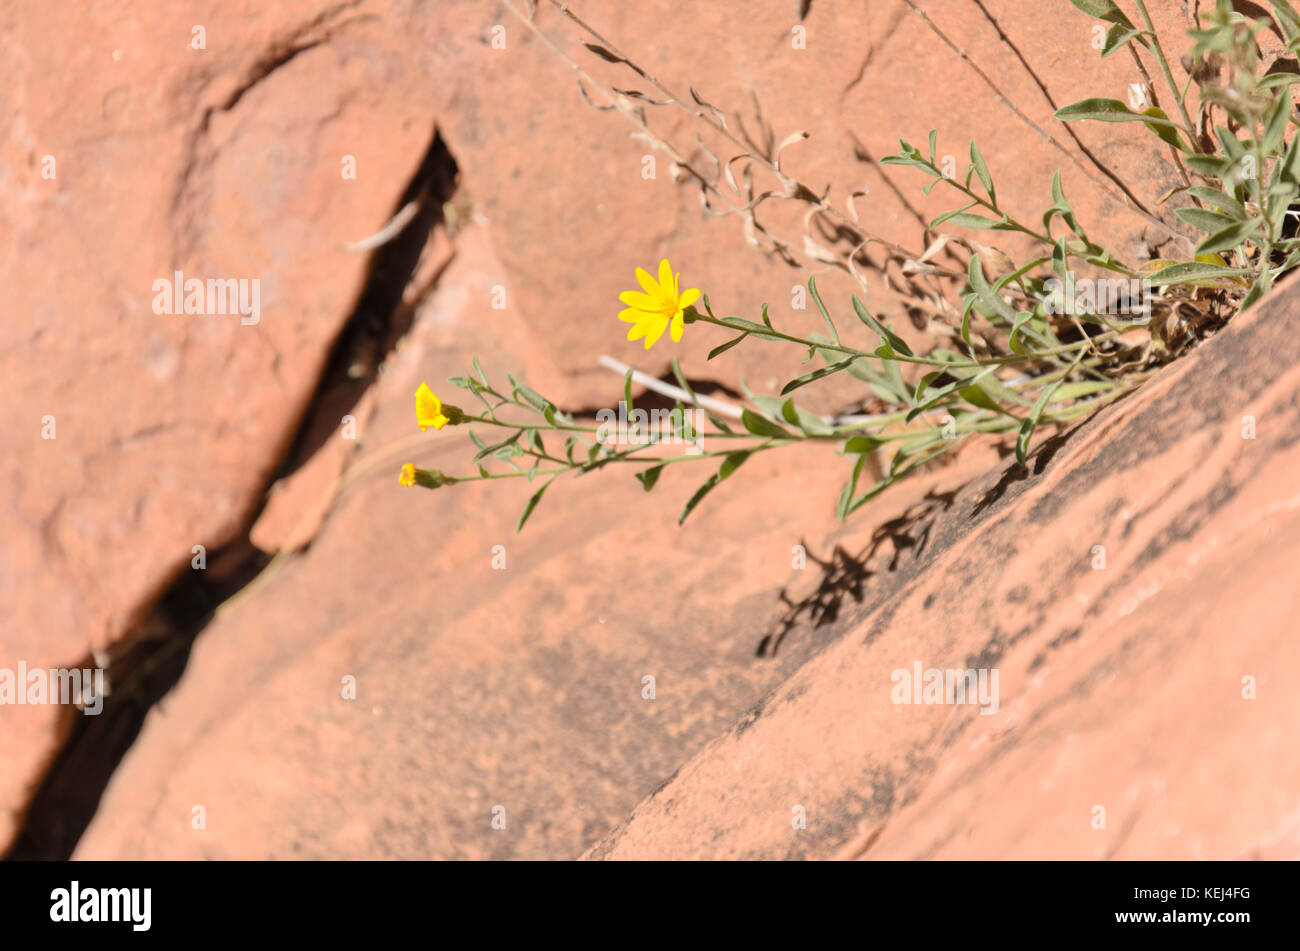 Showy goldeneye (Heliomeris multiflora syn. Viguiera multiflora) Stock Photo